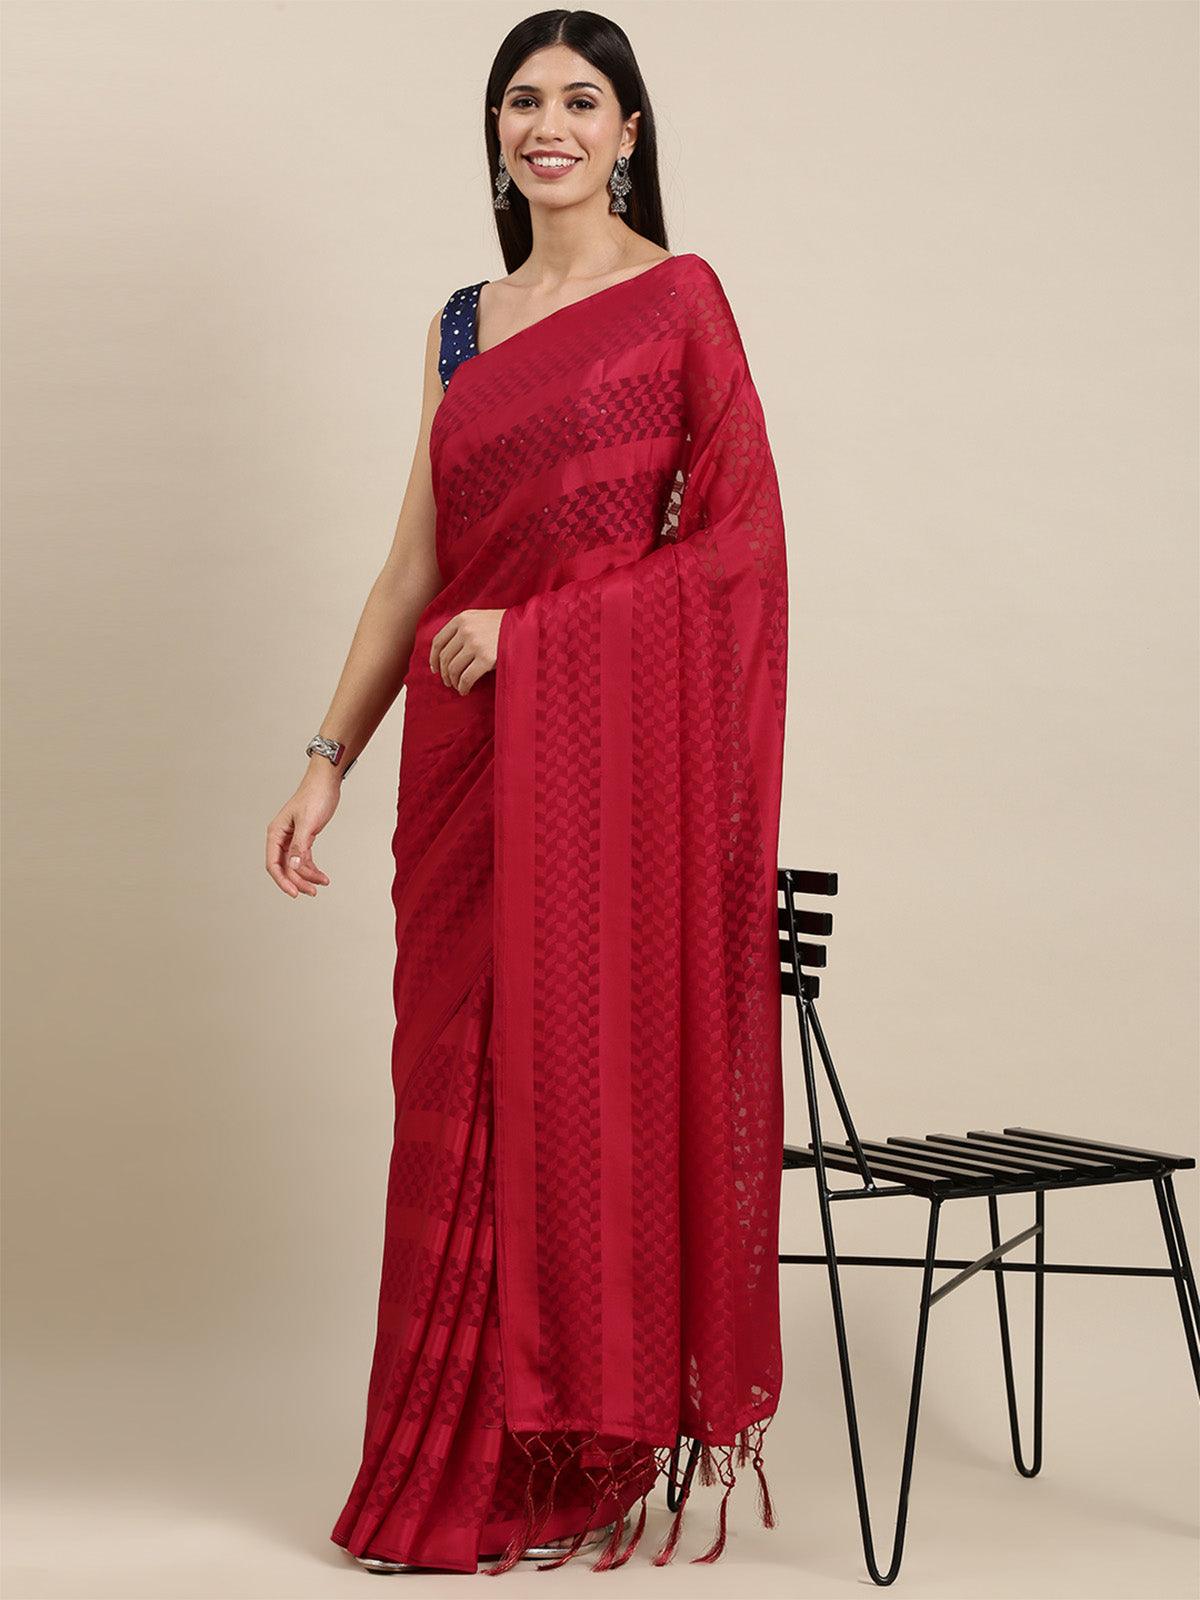 Women's Satin Red Self-Design Designer Saree With Blouse Piece - Odette